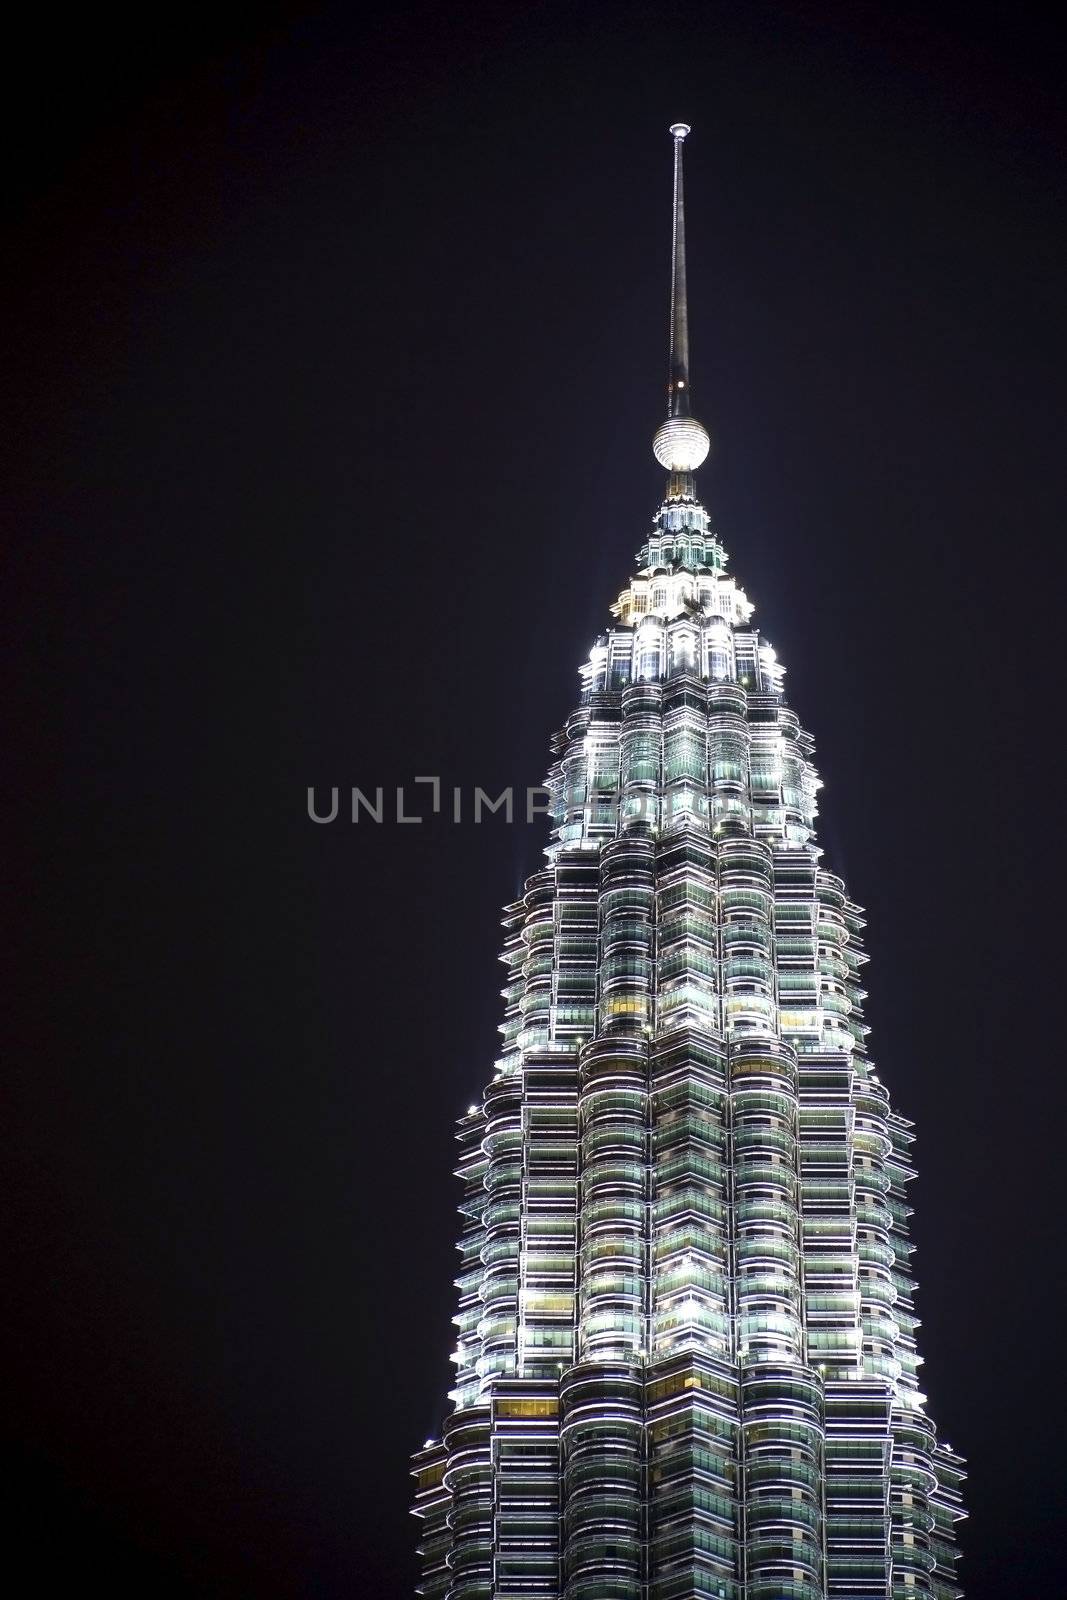 Night image of one of the Petronas Twin Towers in Malaysia.